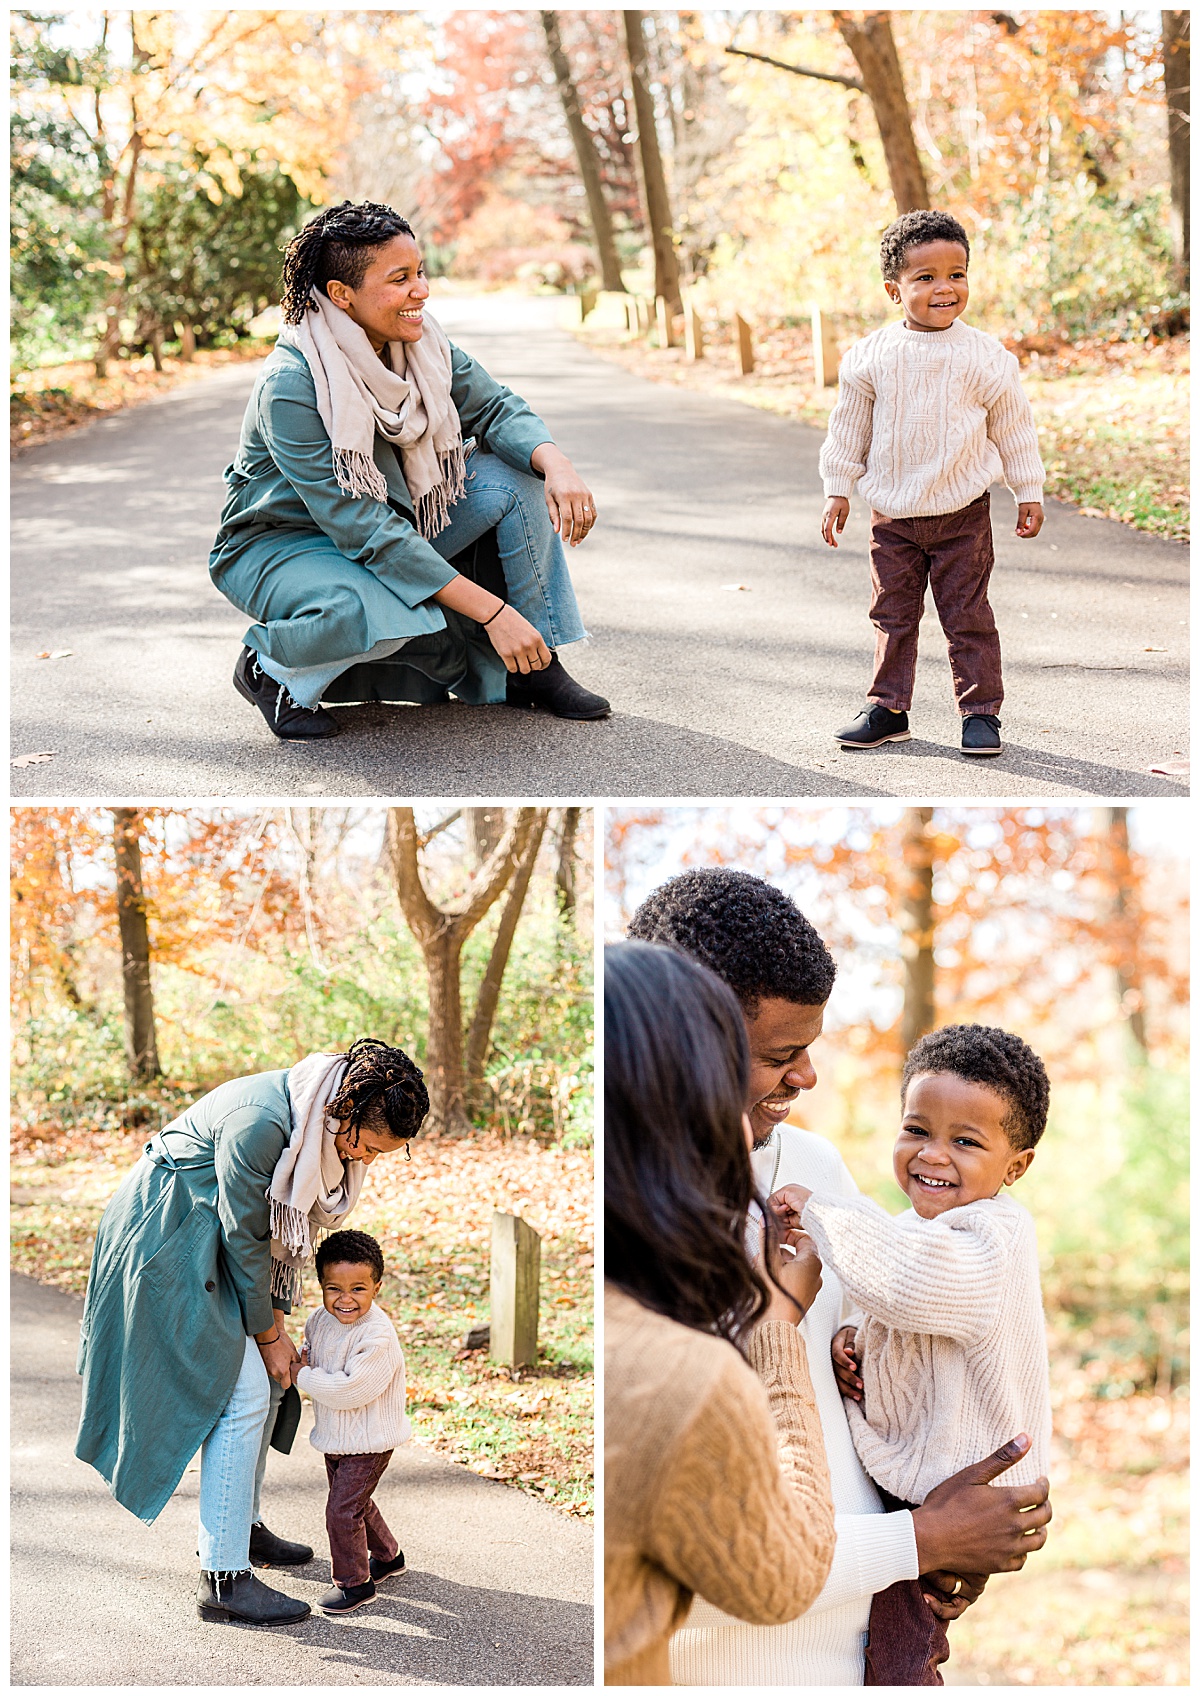 Mother and son's fall mini portraits at Awbury Arboretum taken by Ann Blake Photography, a Philadelphia family photographer.